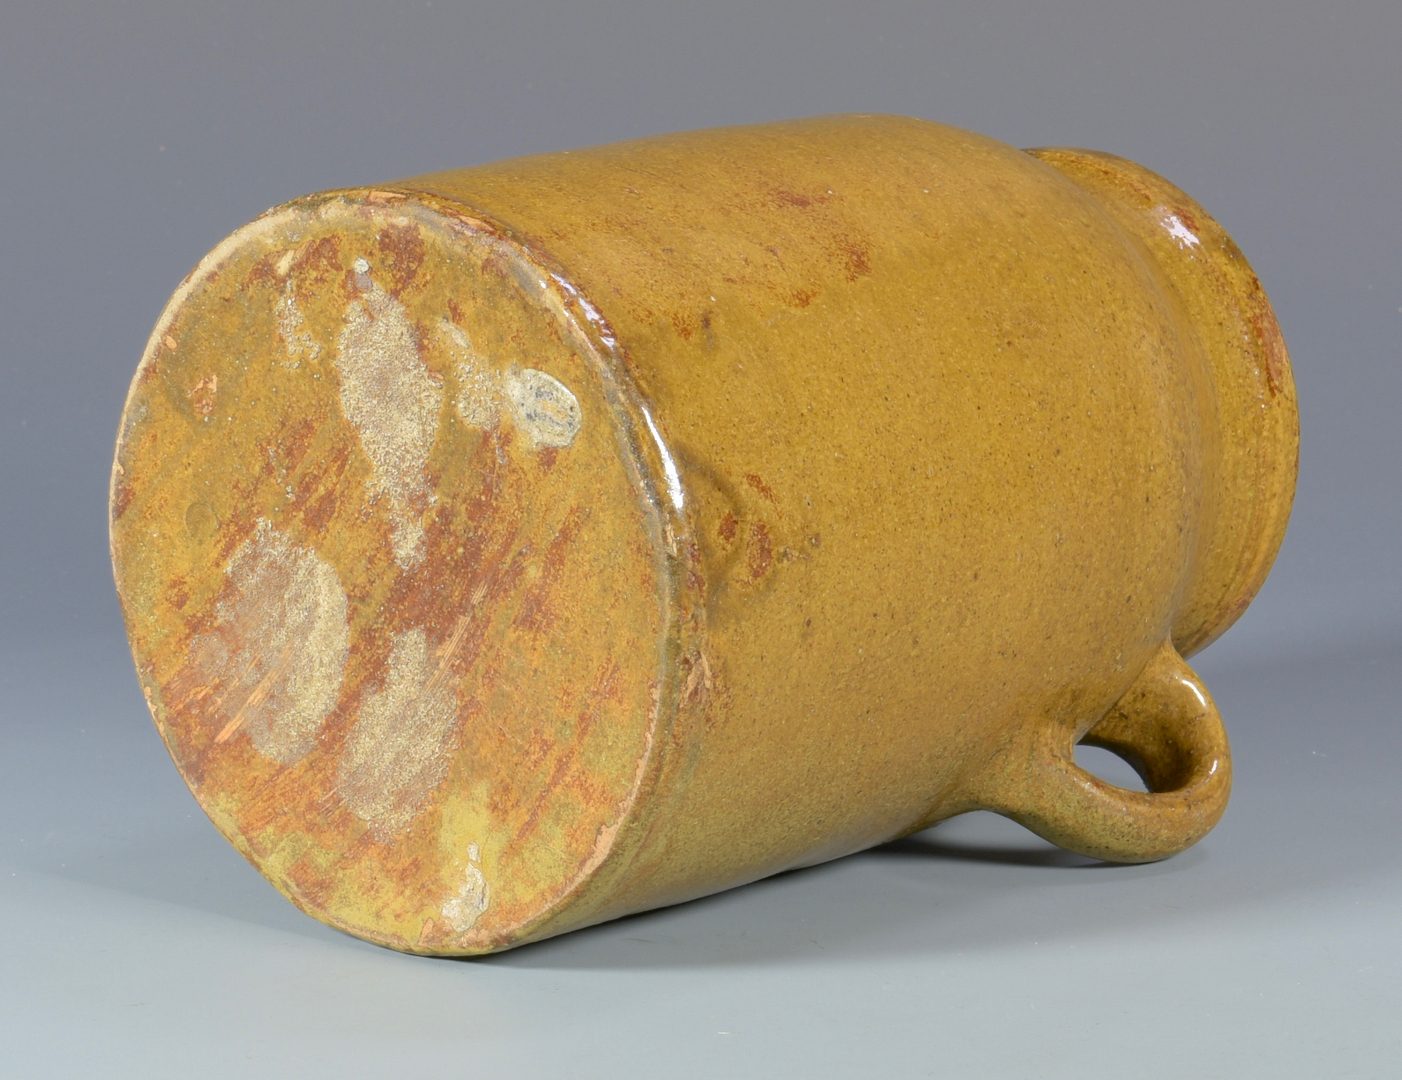 Lot 141: Alabama Pottery Jar, Marks for Martin H. Eckerbusch